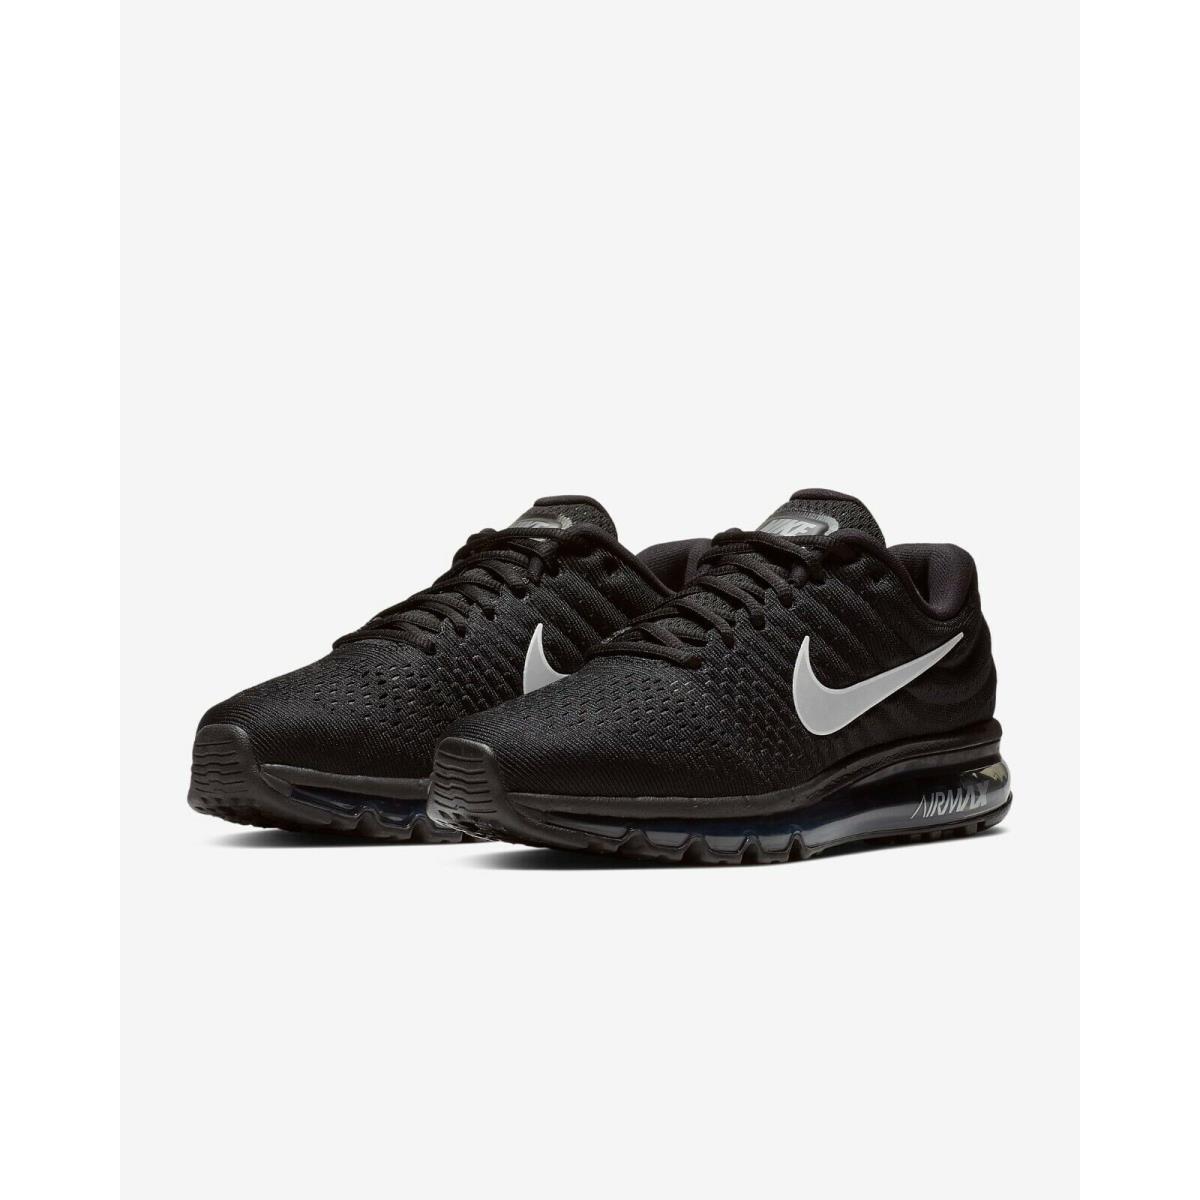 Nike Air Max 2017 Running Shoes Black / White Sz 11 849559 001